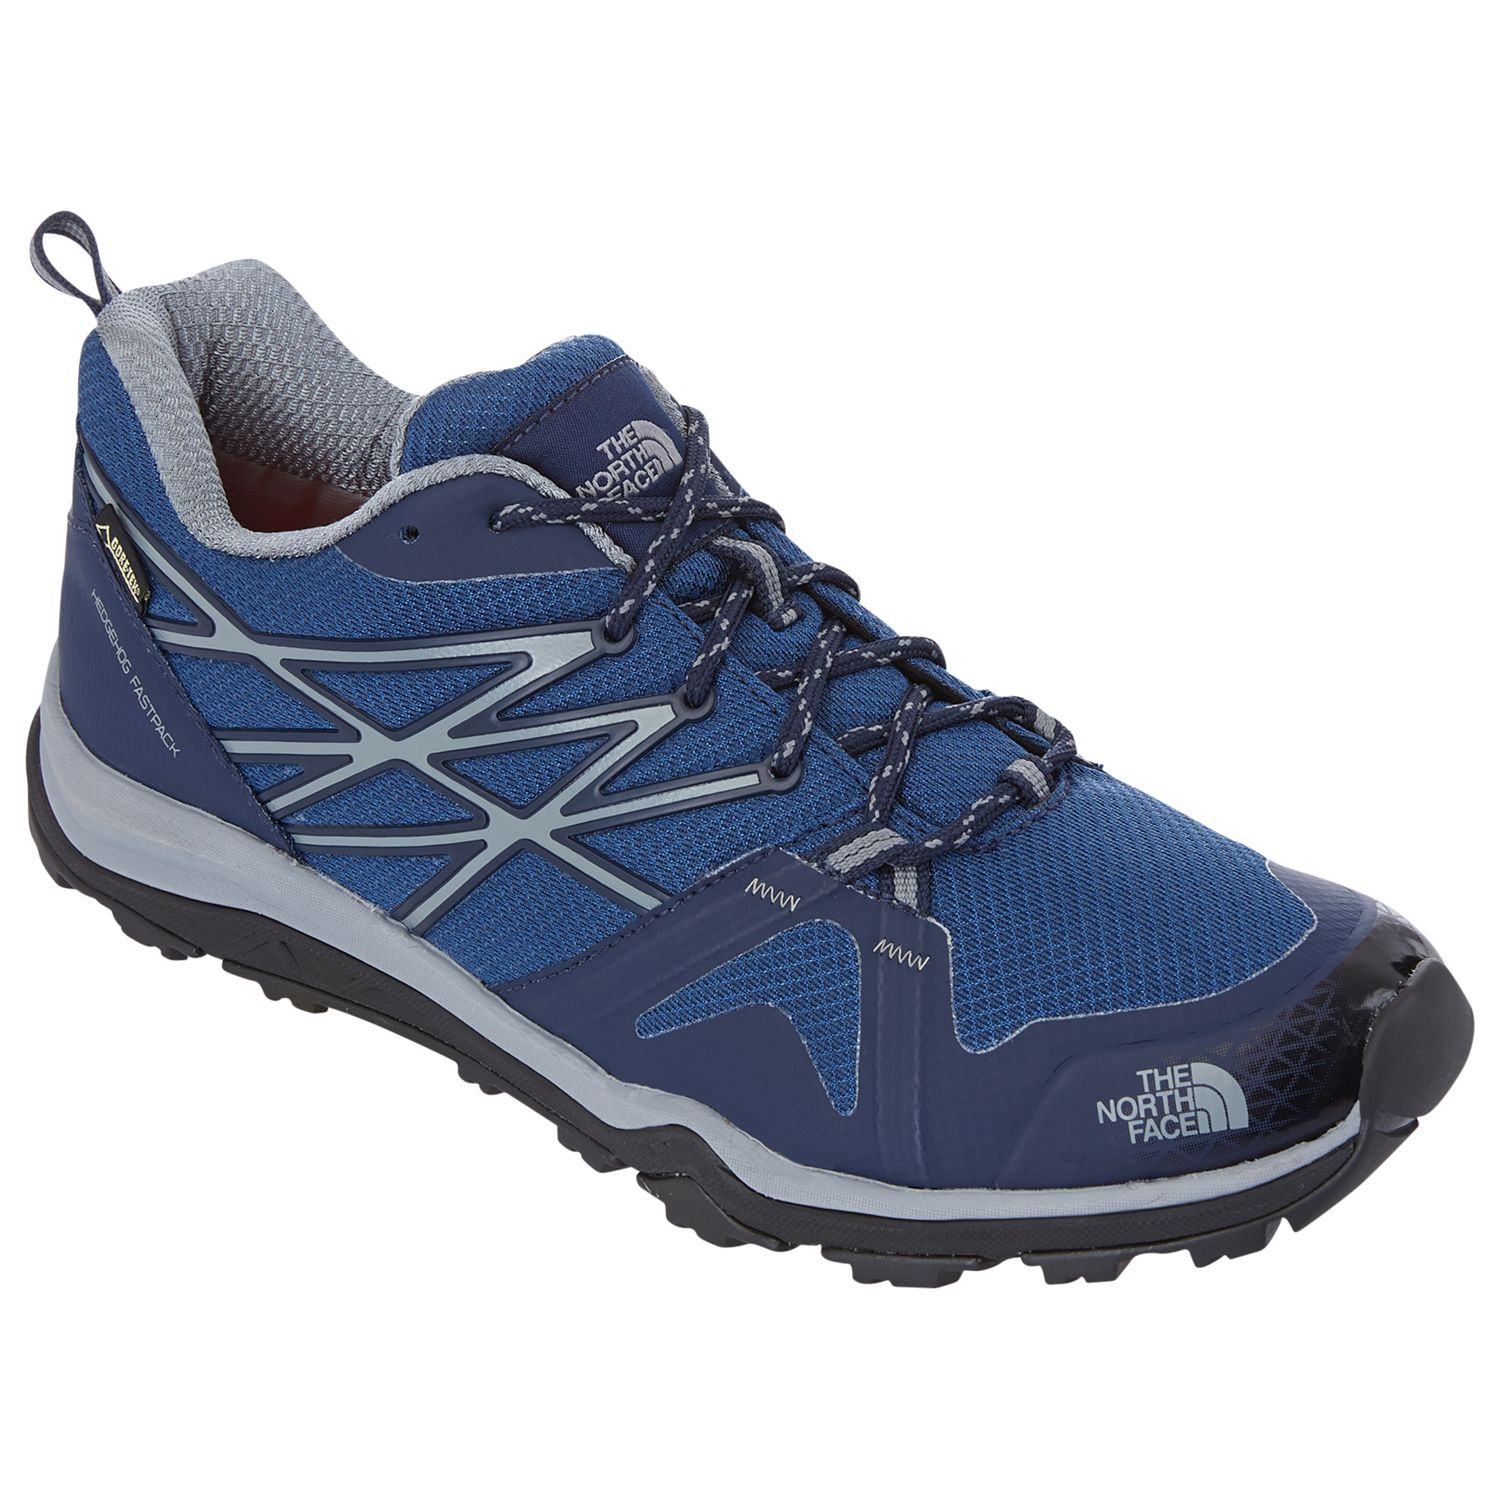 Correct park toenemen The North Face Hedgehog Fastpack Lite Men's Hiking Shoes, Blue/Multi